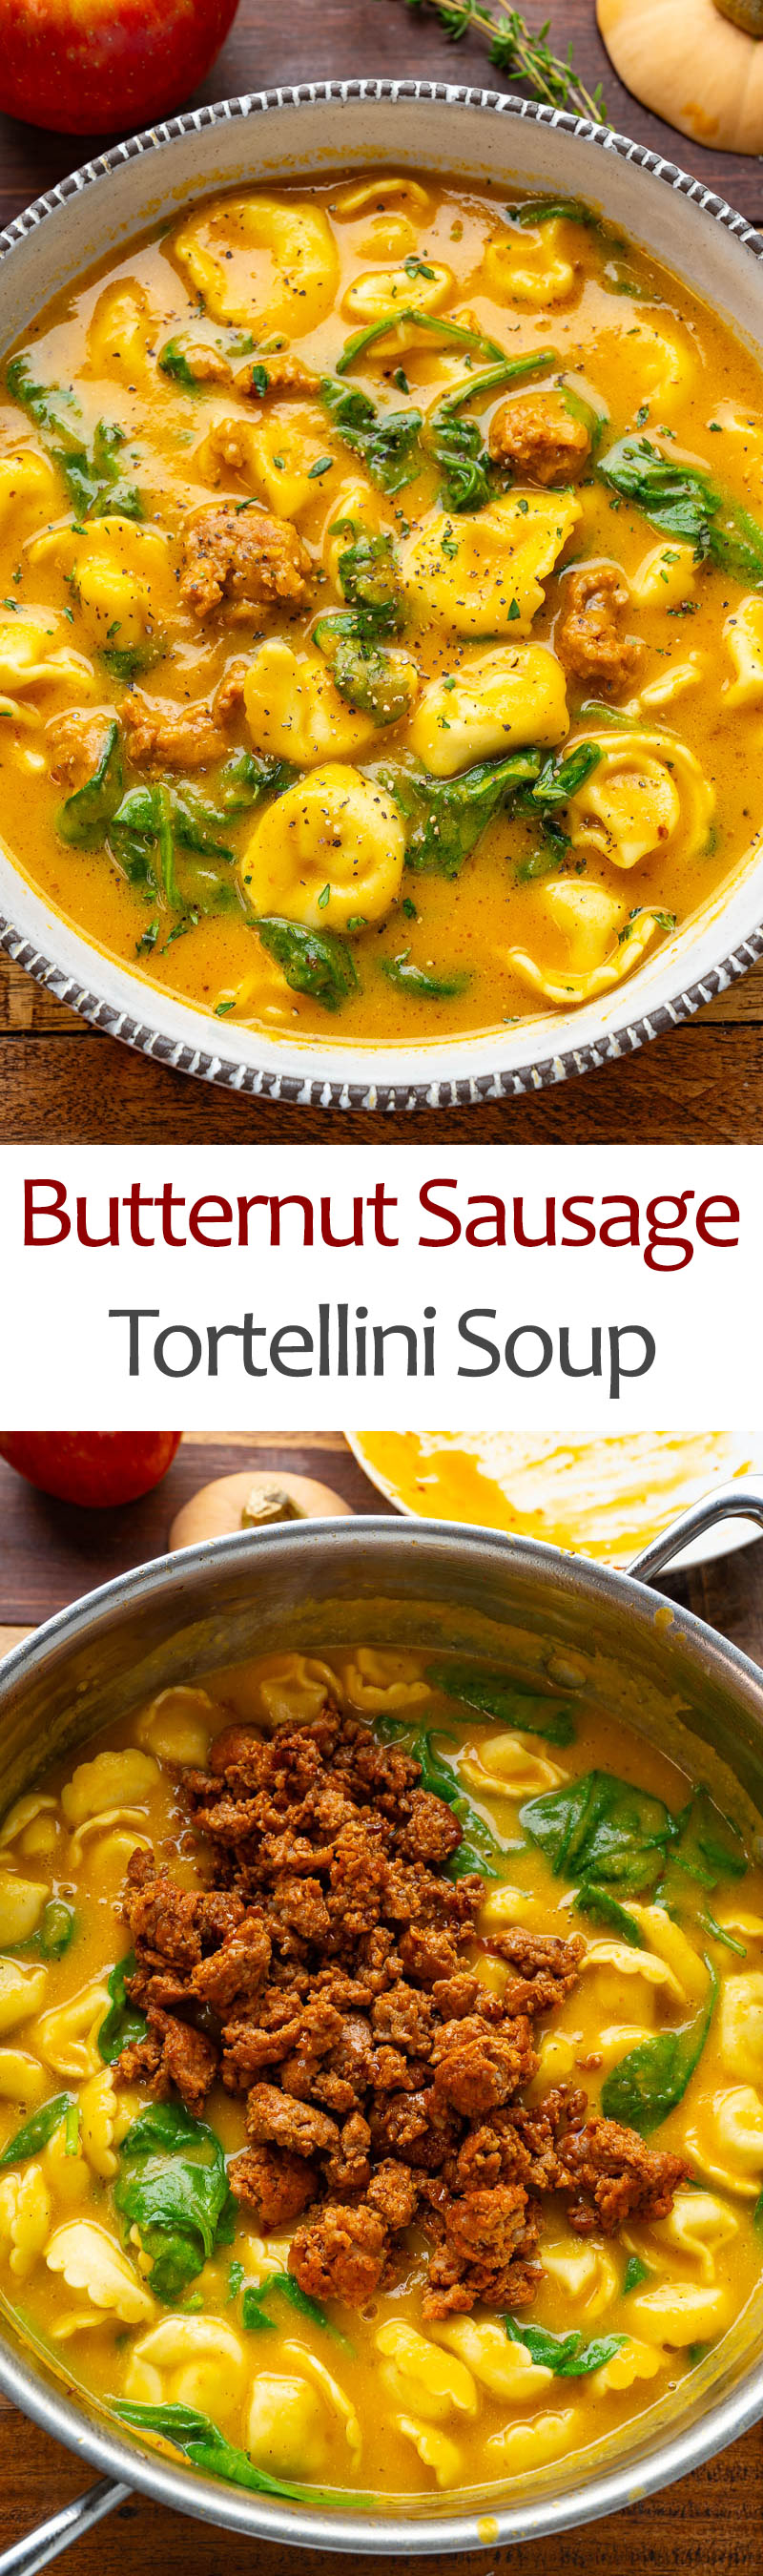 Butternut Sausage Tortellini Soup